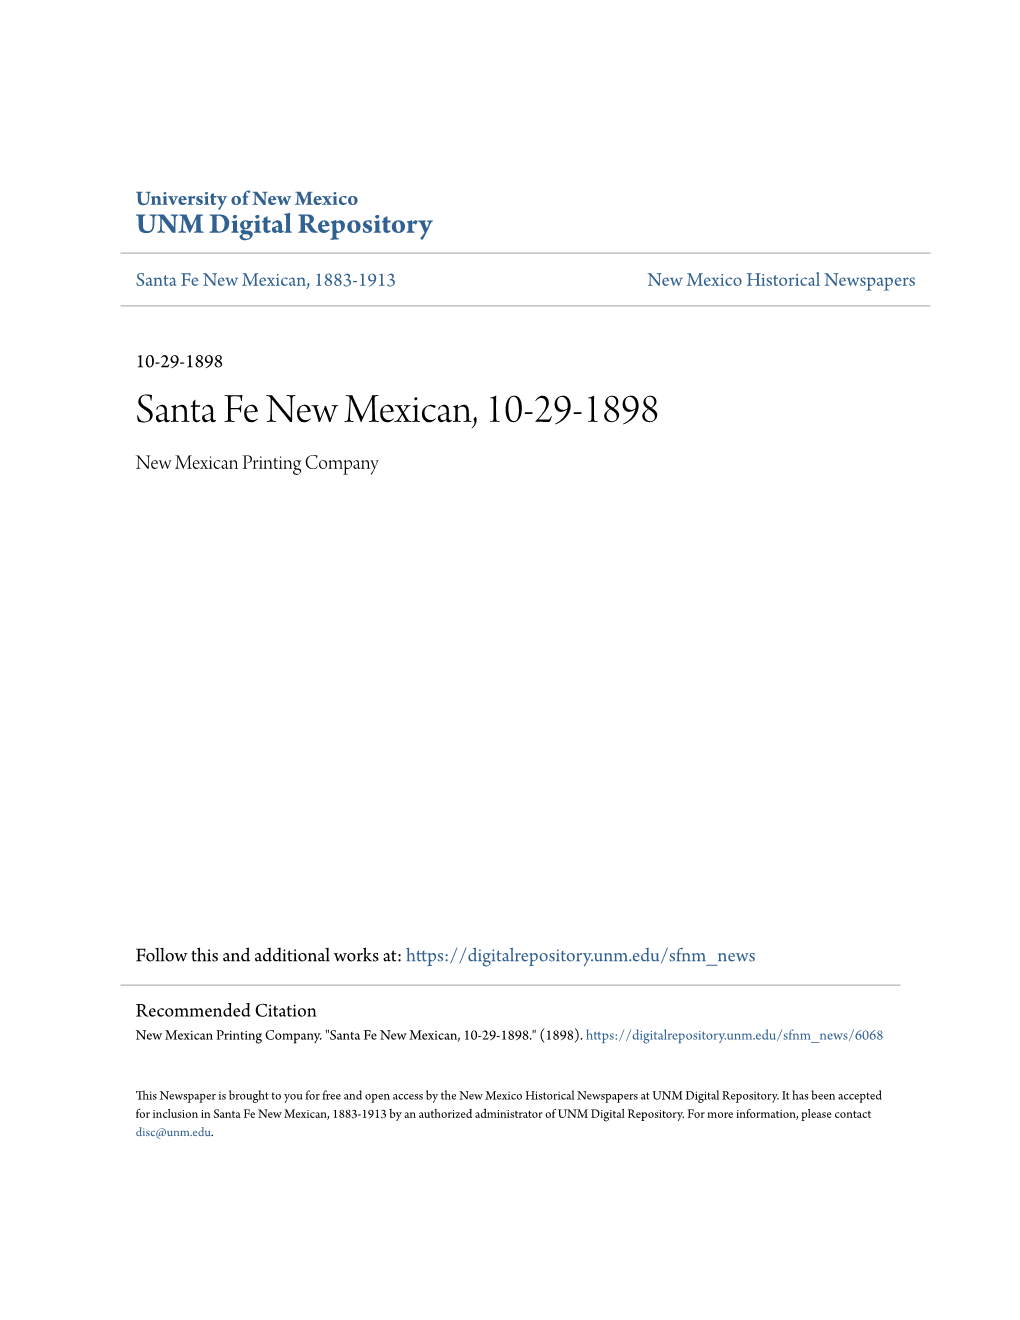 Santa Fe New Mexican, 10-29-1898 New Mexican Printing Company